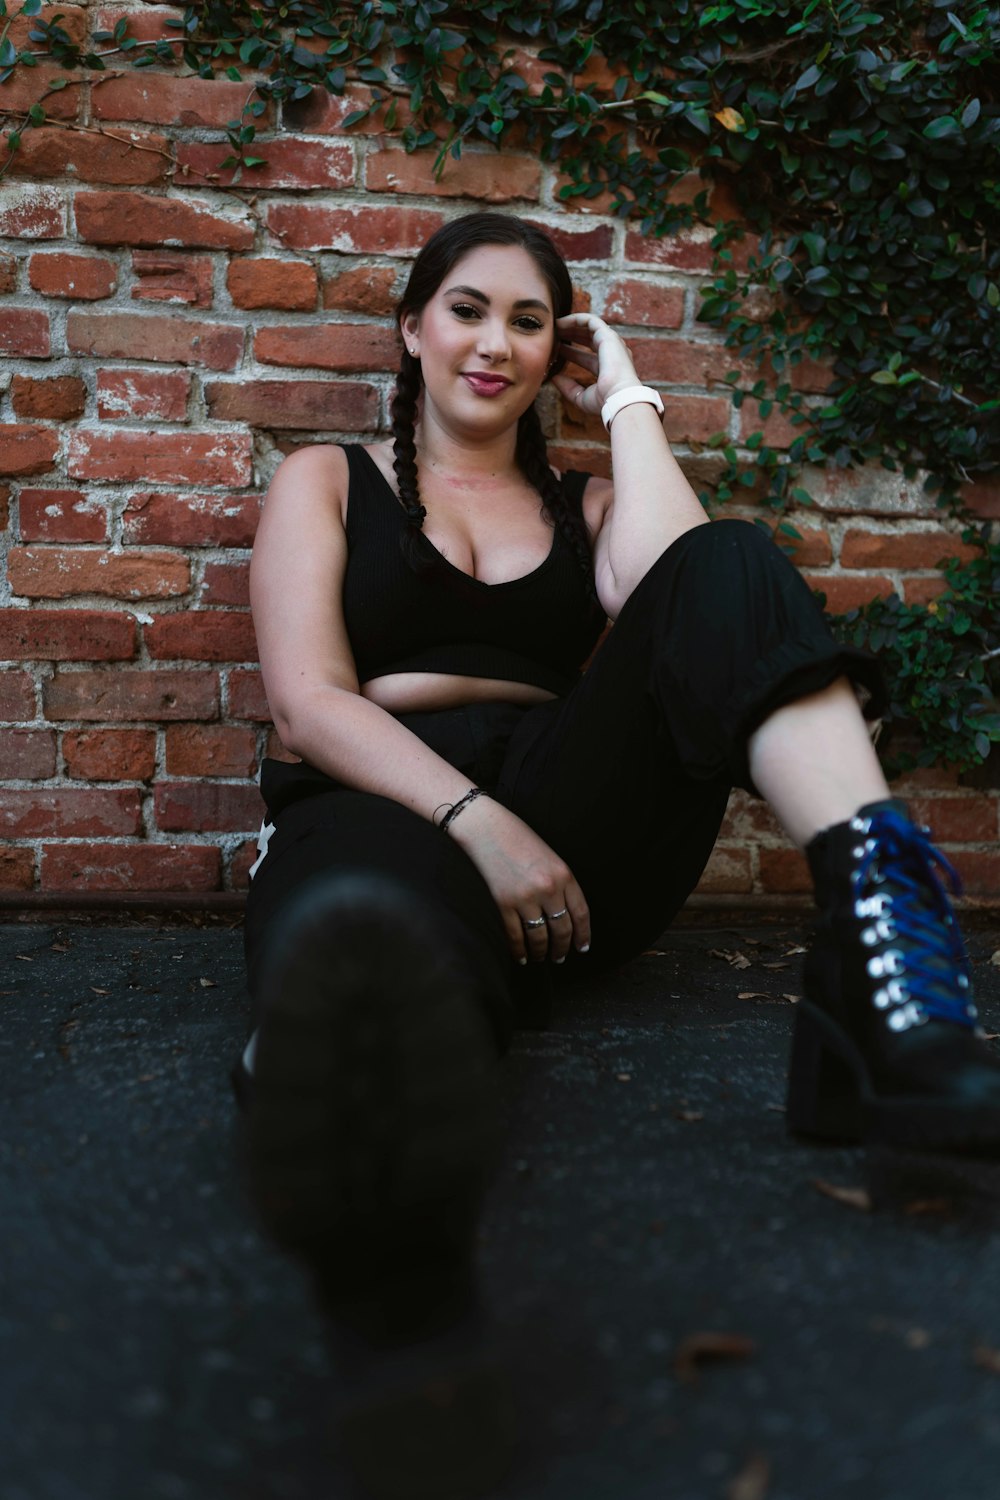 woman in black tank top and black pants sitting on floor